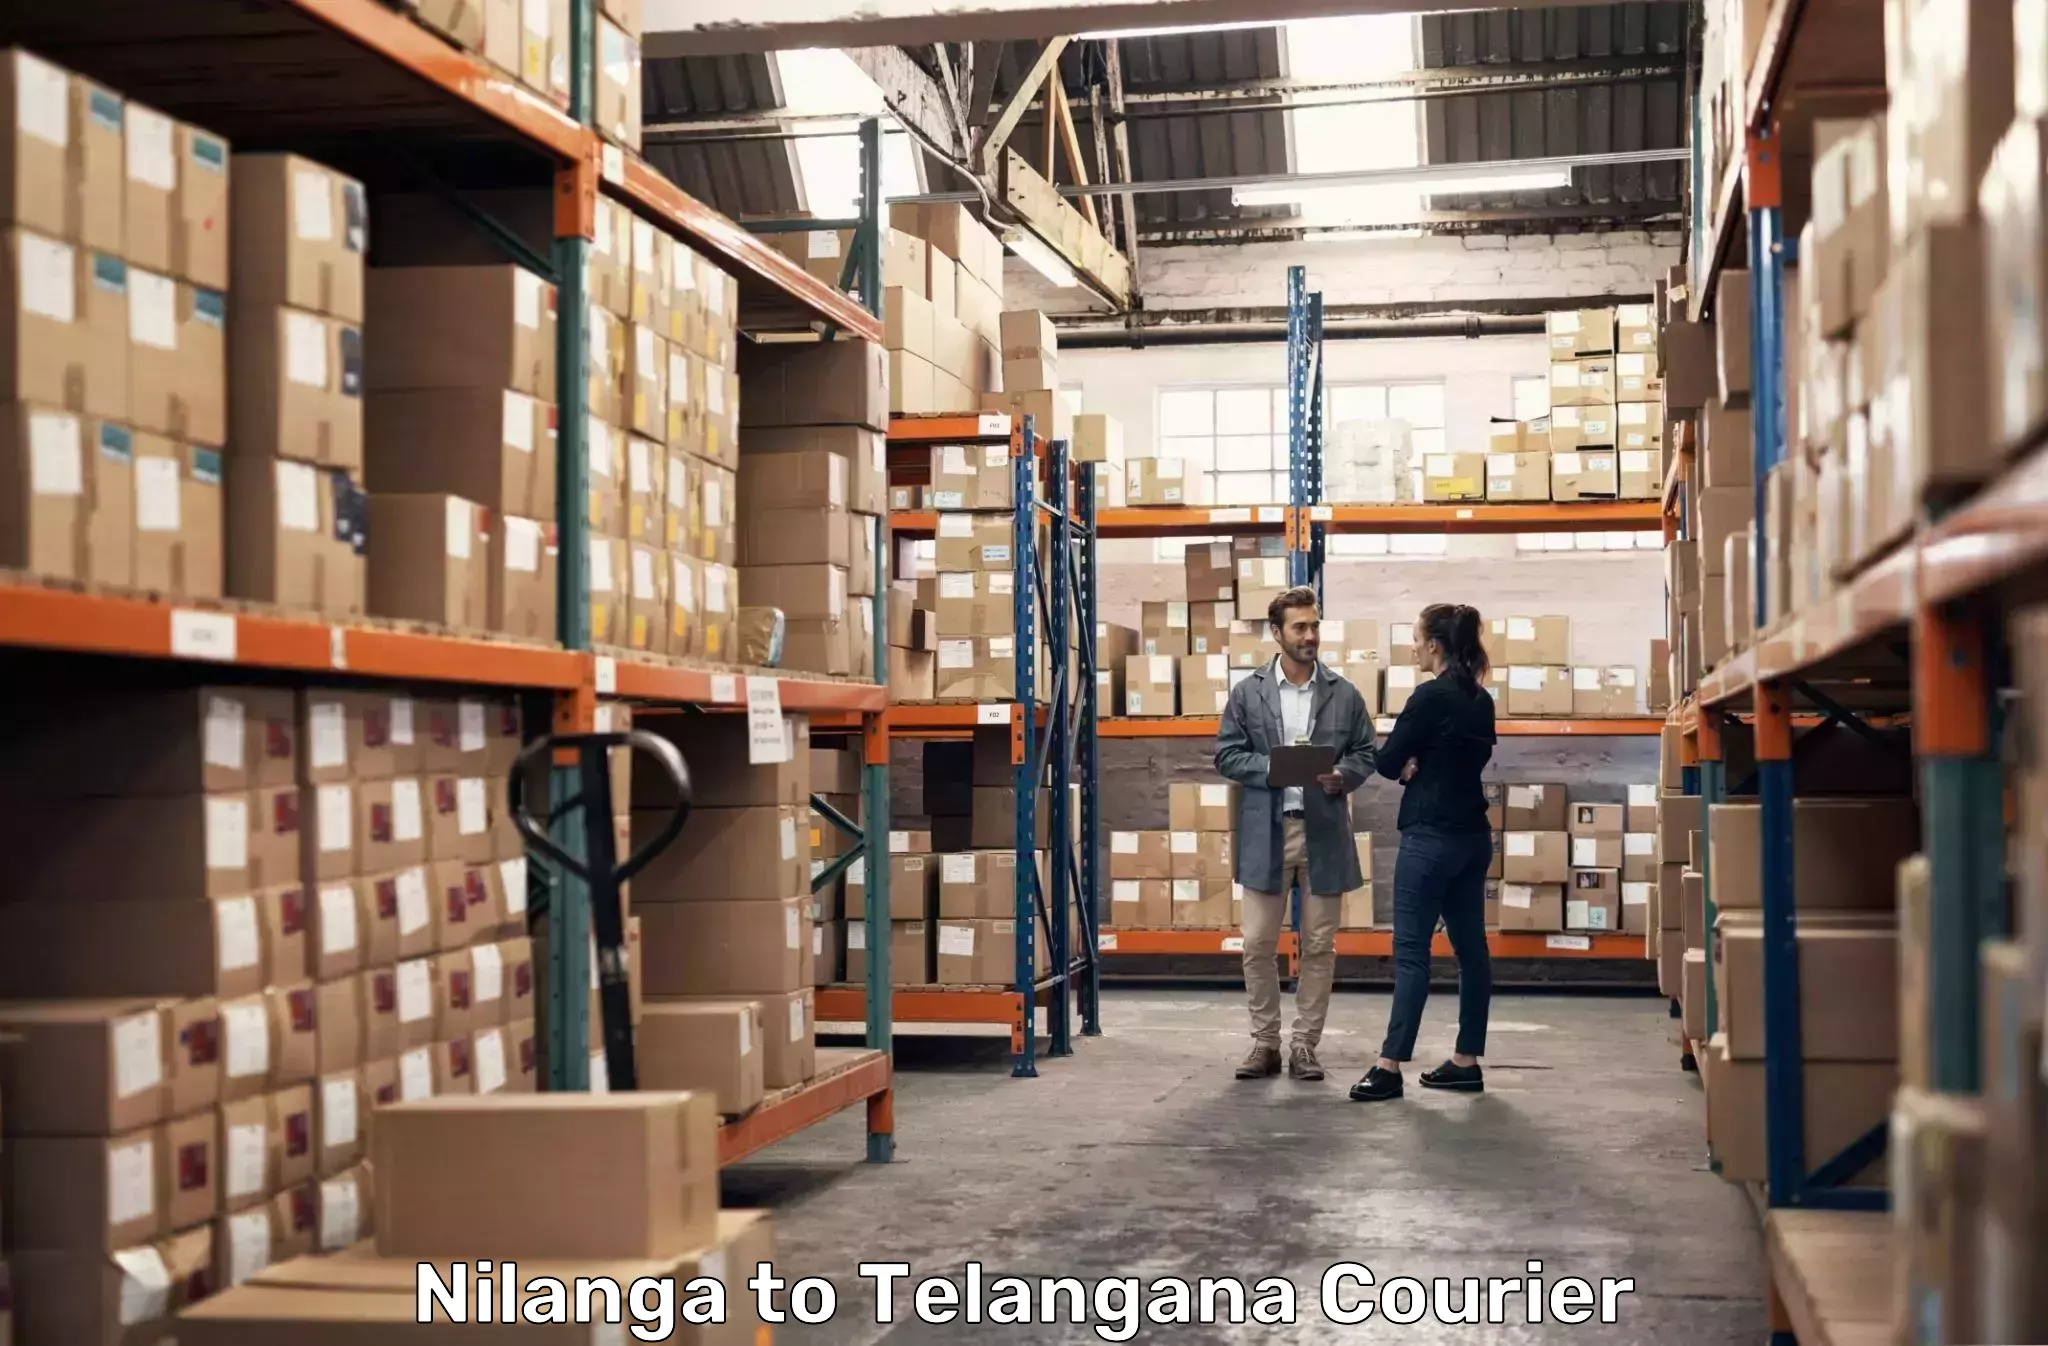 Courier service innovation Nilanga to Telangana